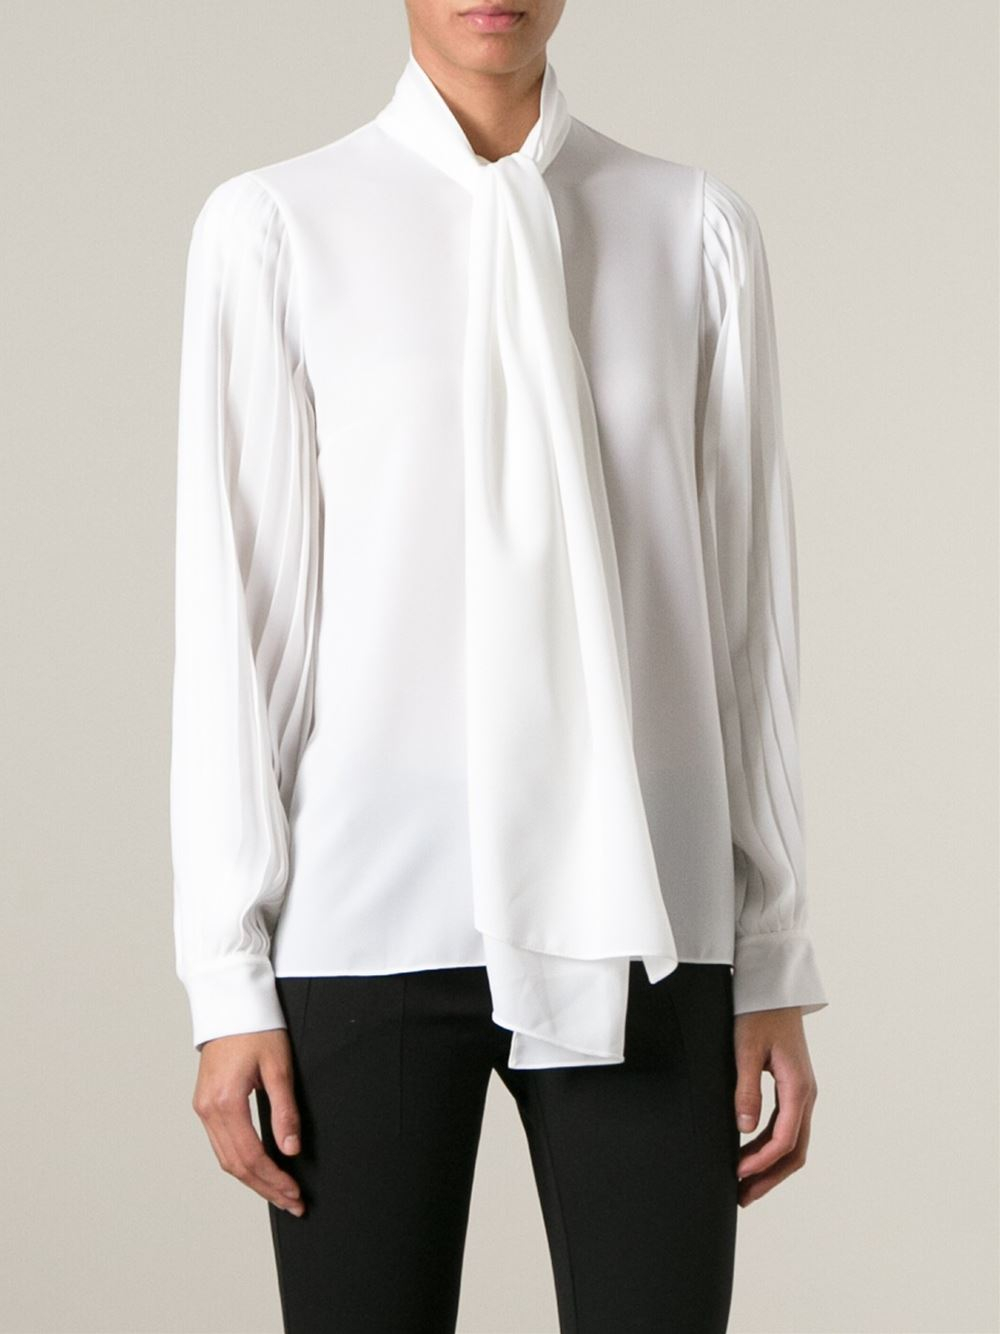 michael kors white blouses dillon medium tote - Marwood VeneerMarwood Veneer